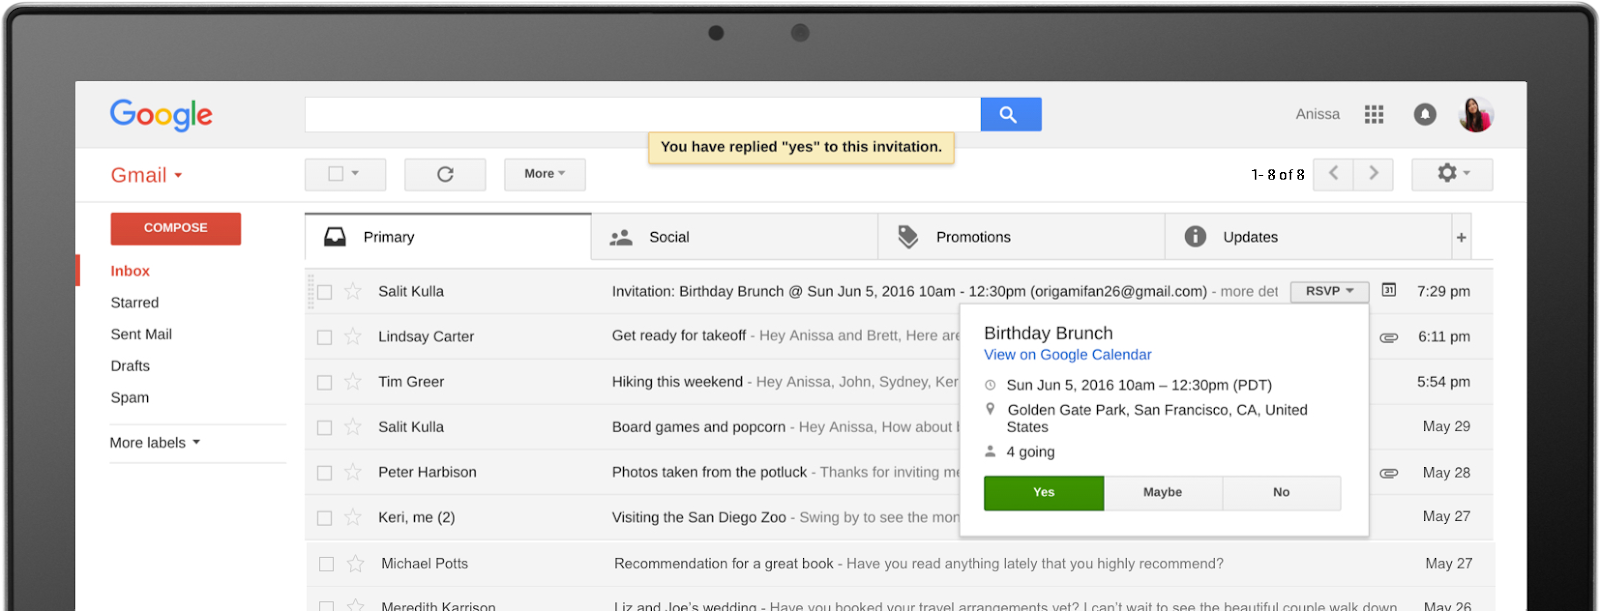 L gmail com. Google почта. Гмайл почта. Gmail картинка. Почтовый сервис gmail.